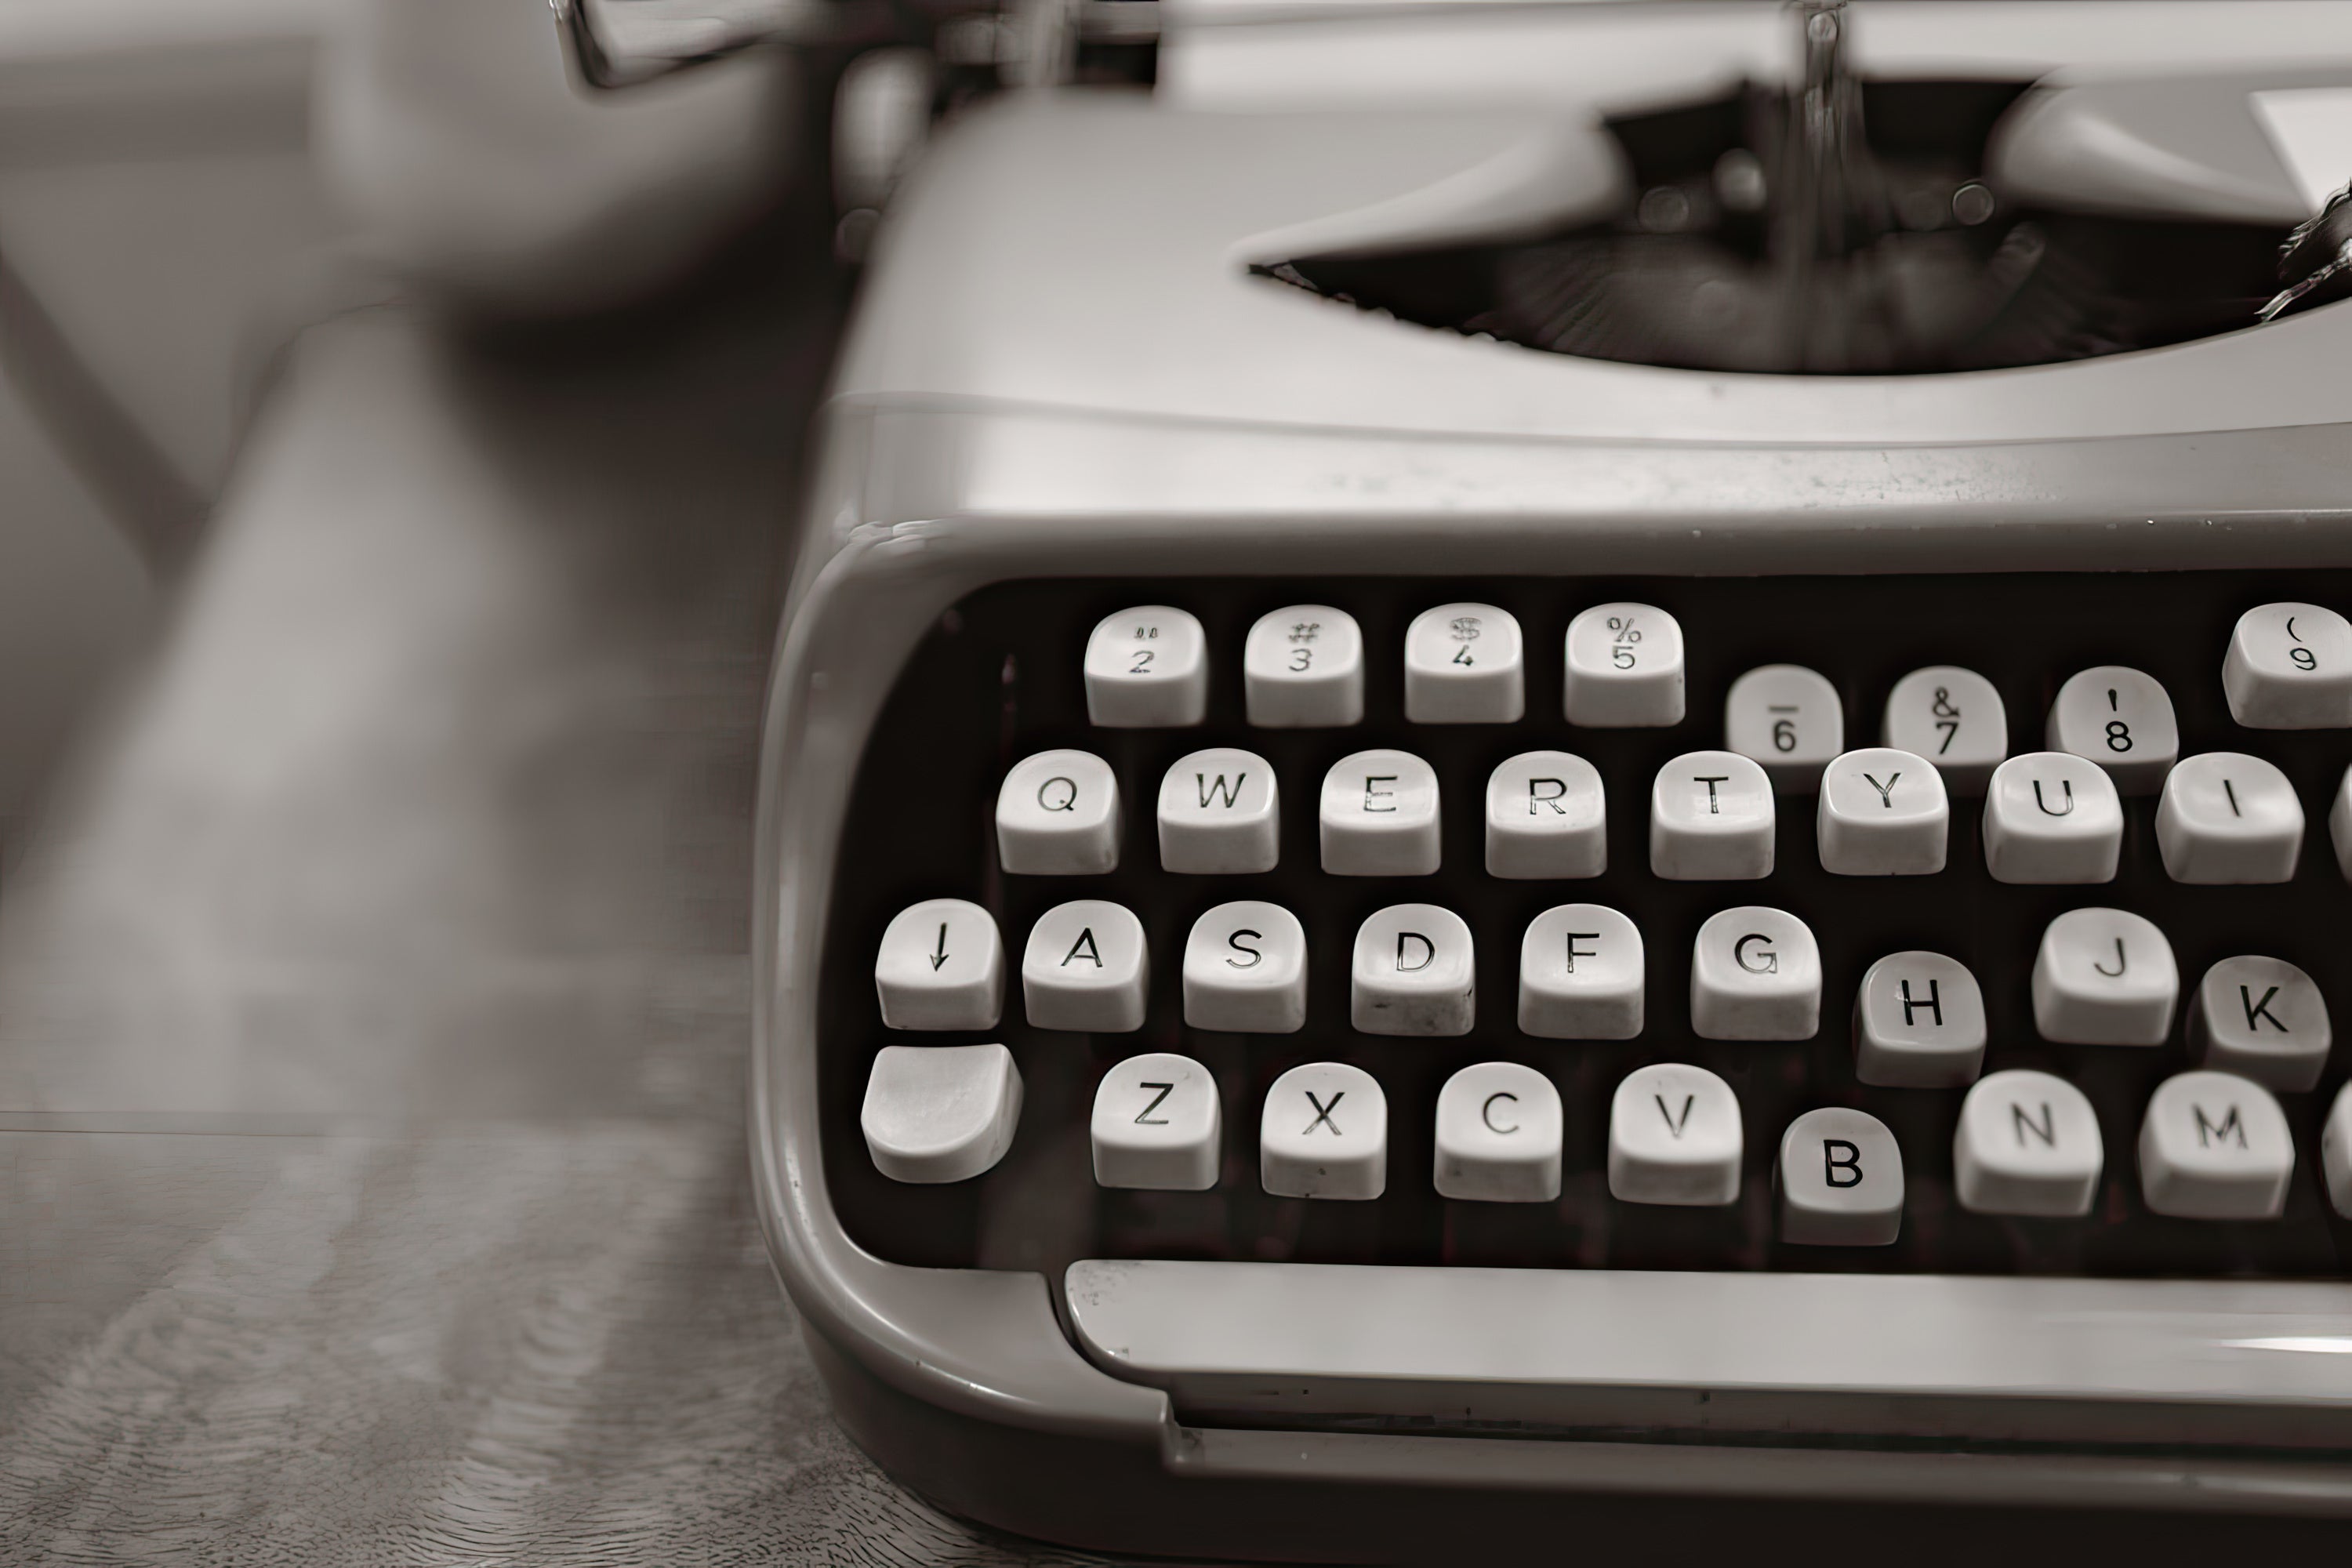 2022 First 10 Pages Showcase - Image of retro typewriter